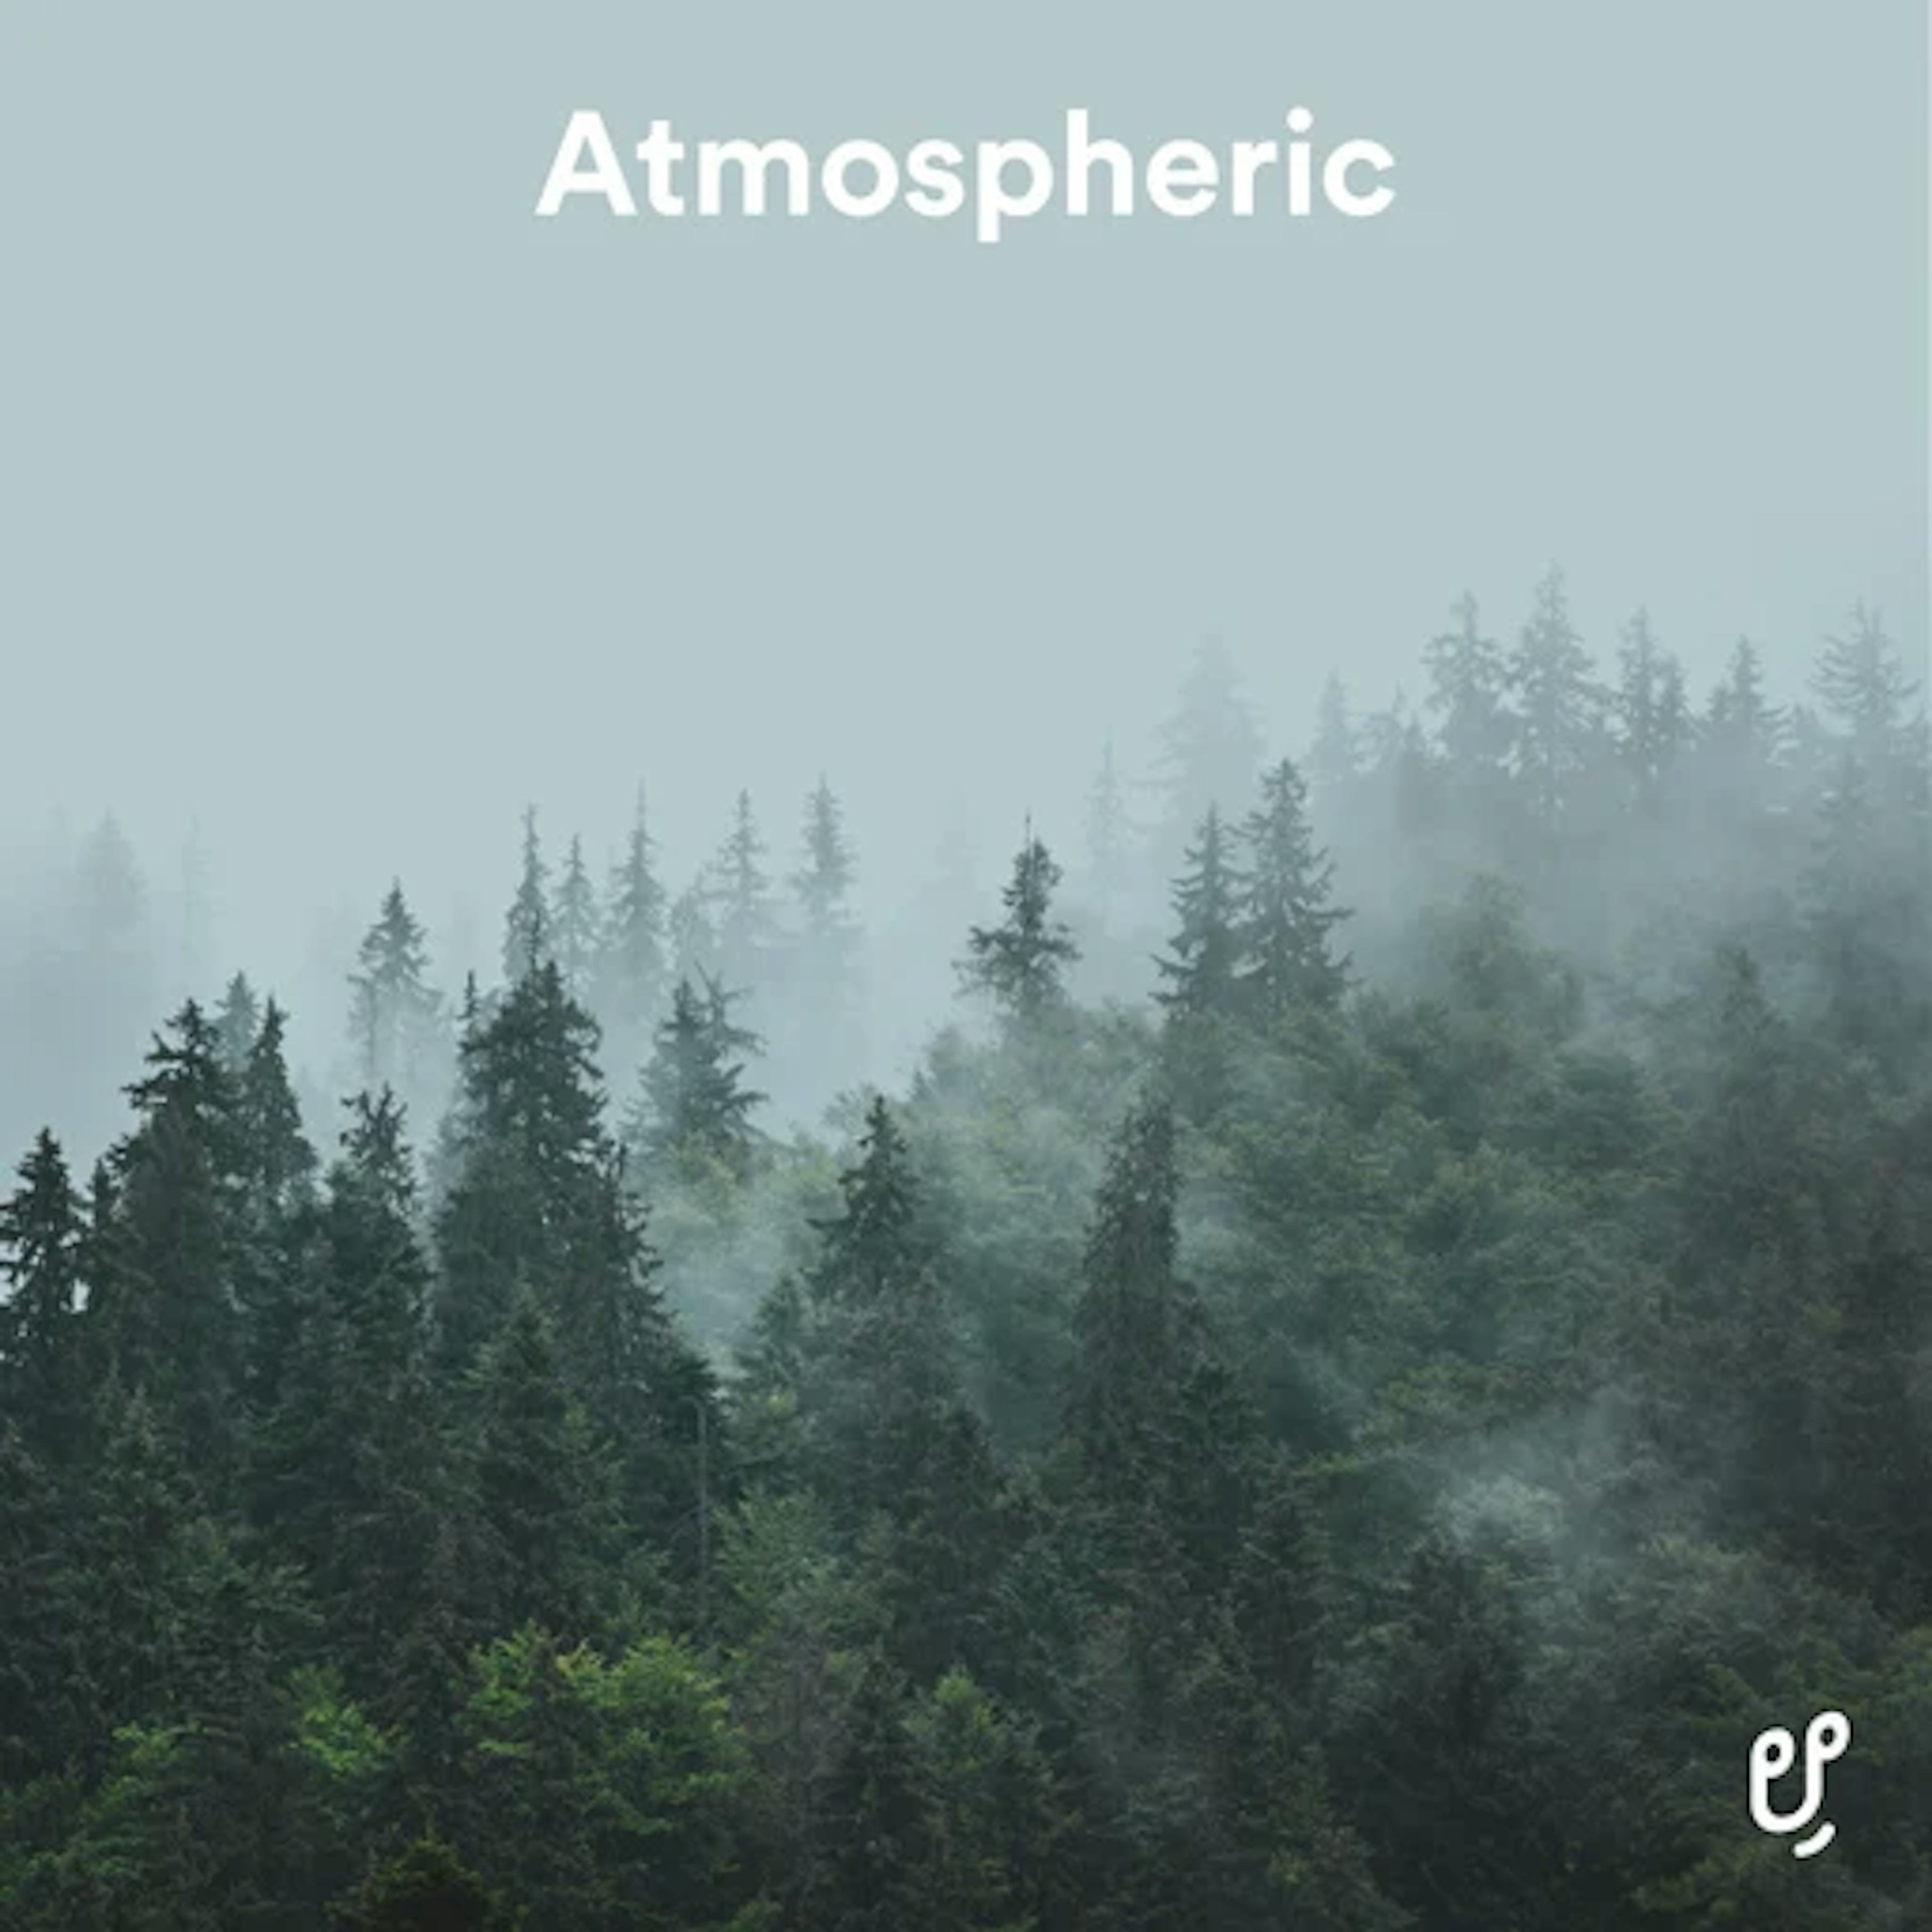 Atmospheric artwork